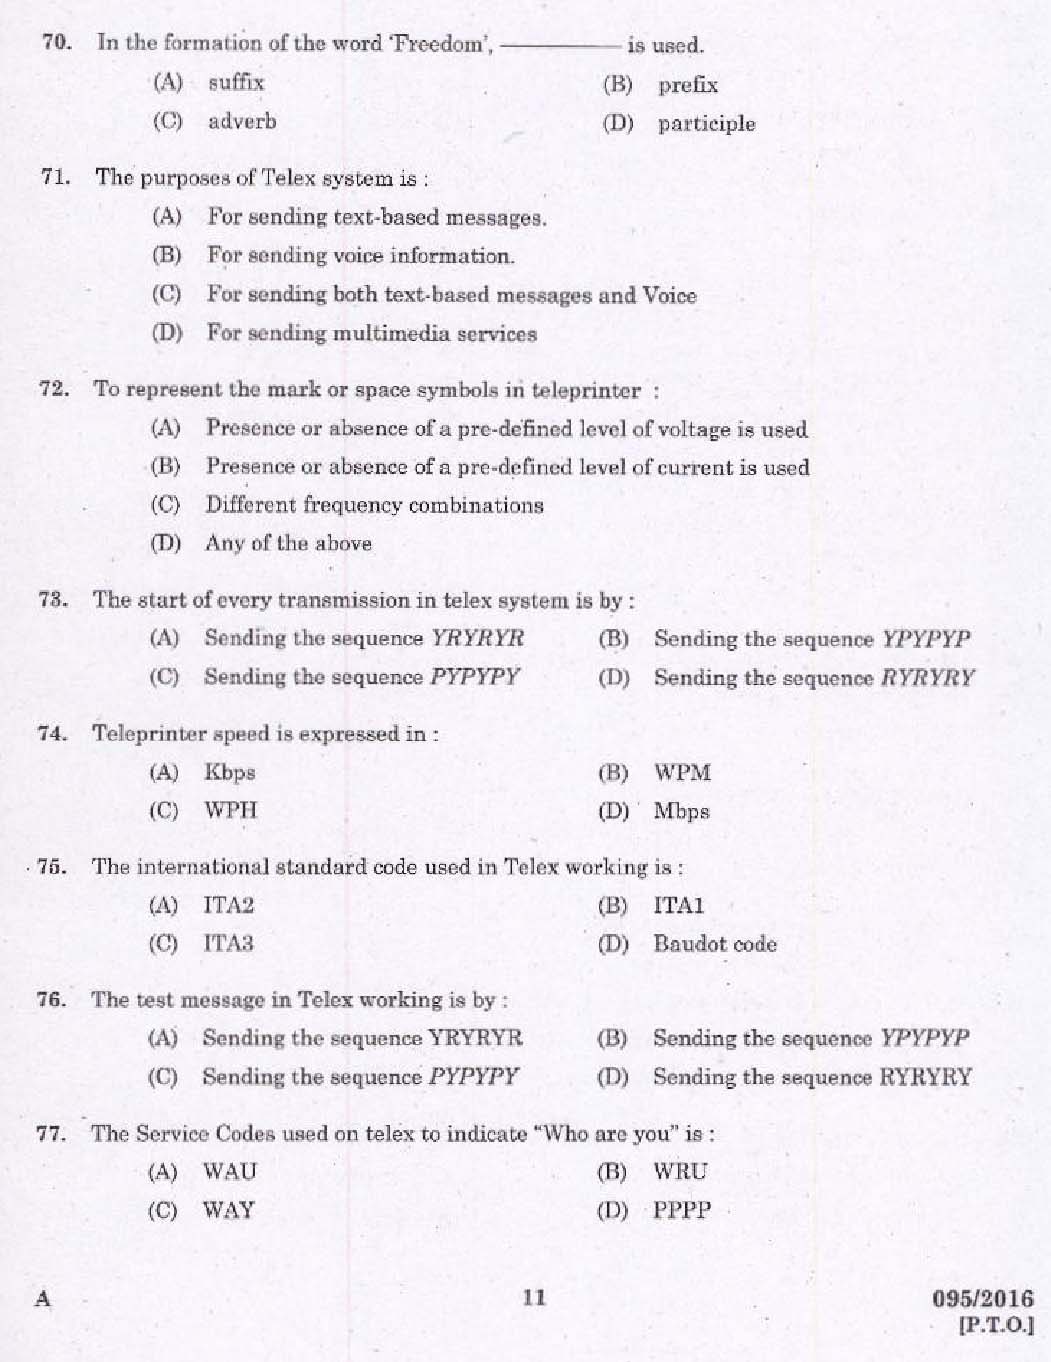 Kerala PSC Telephone Operator Exam Question Code 0952016 9